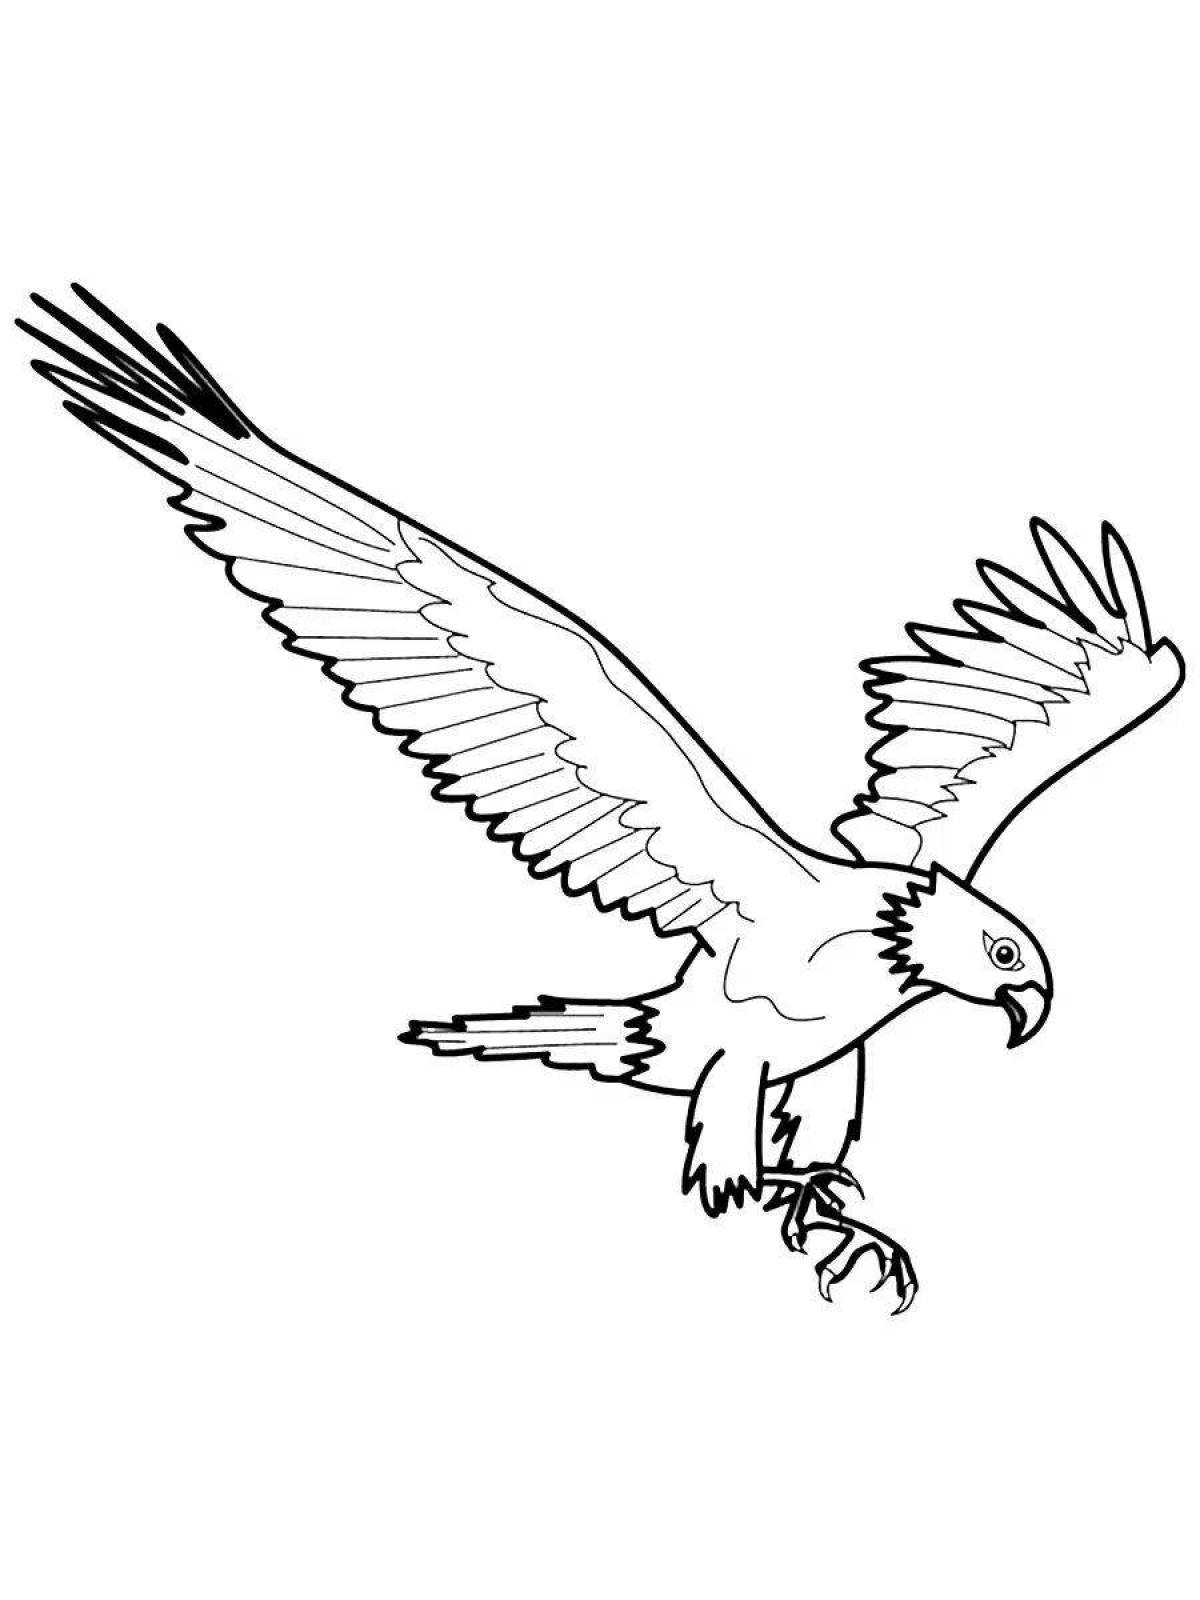 Coloring page elegant steppe eagle